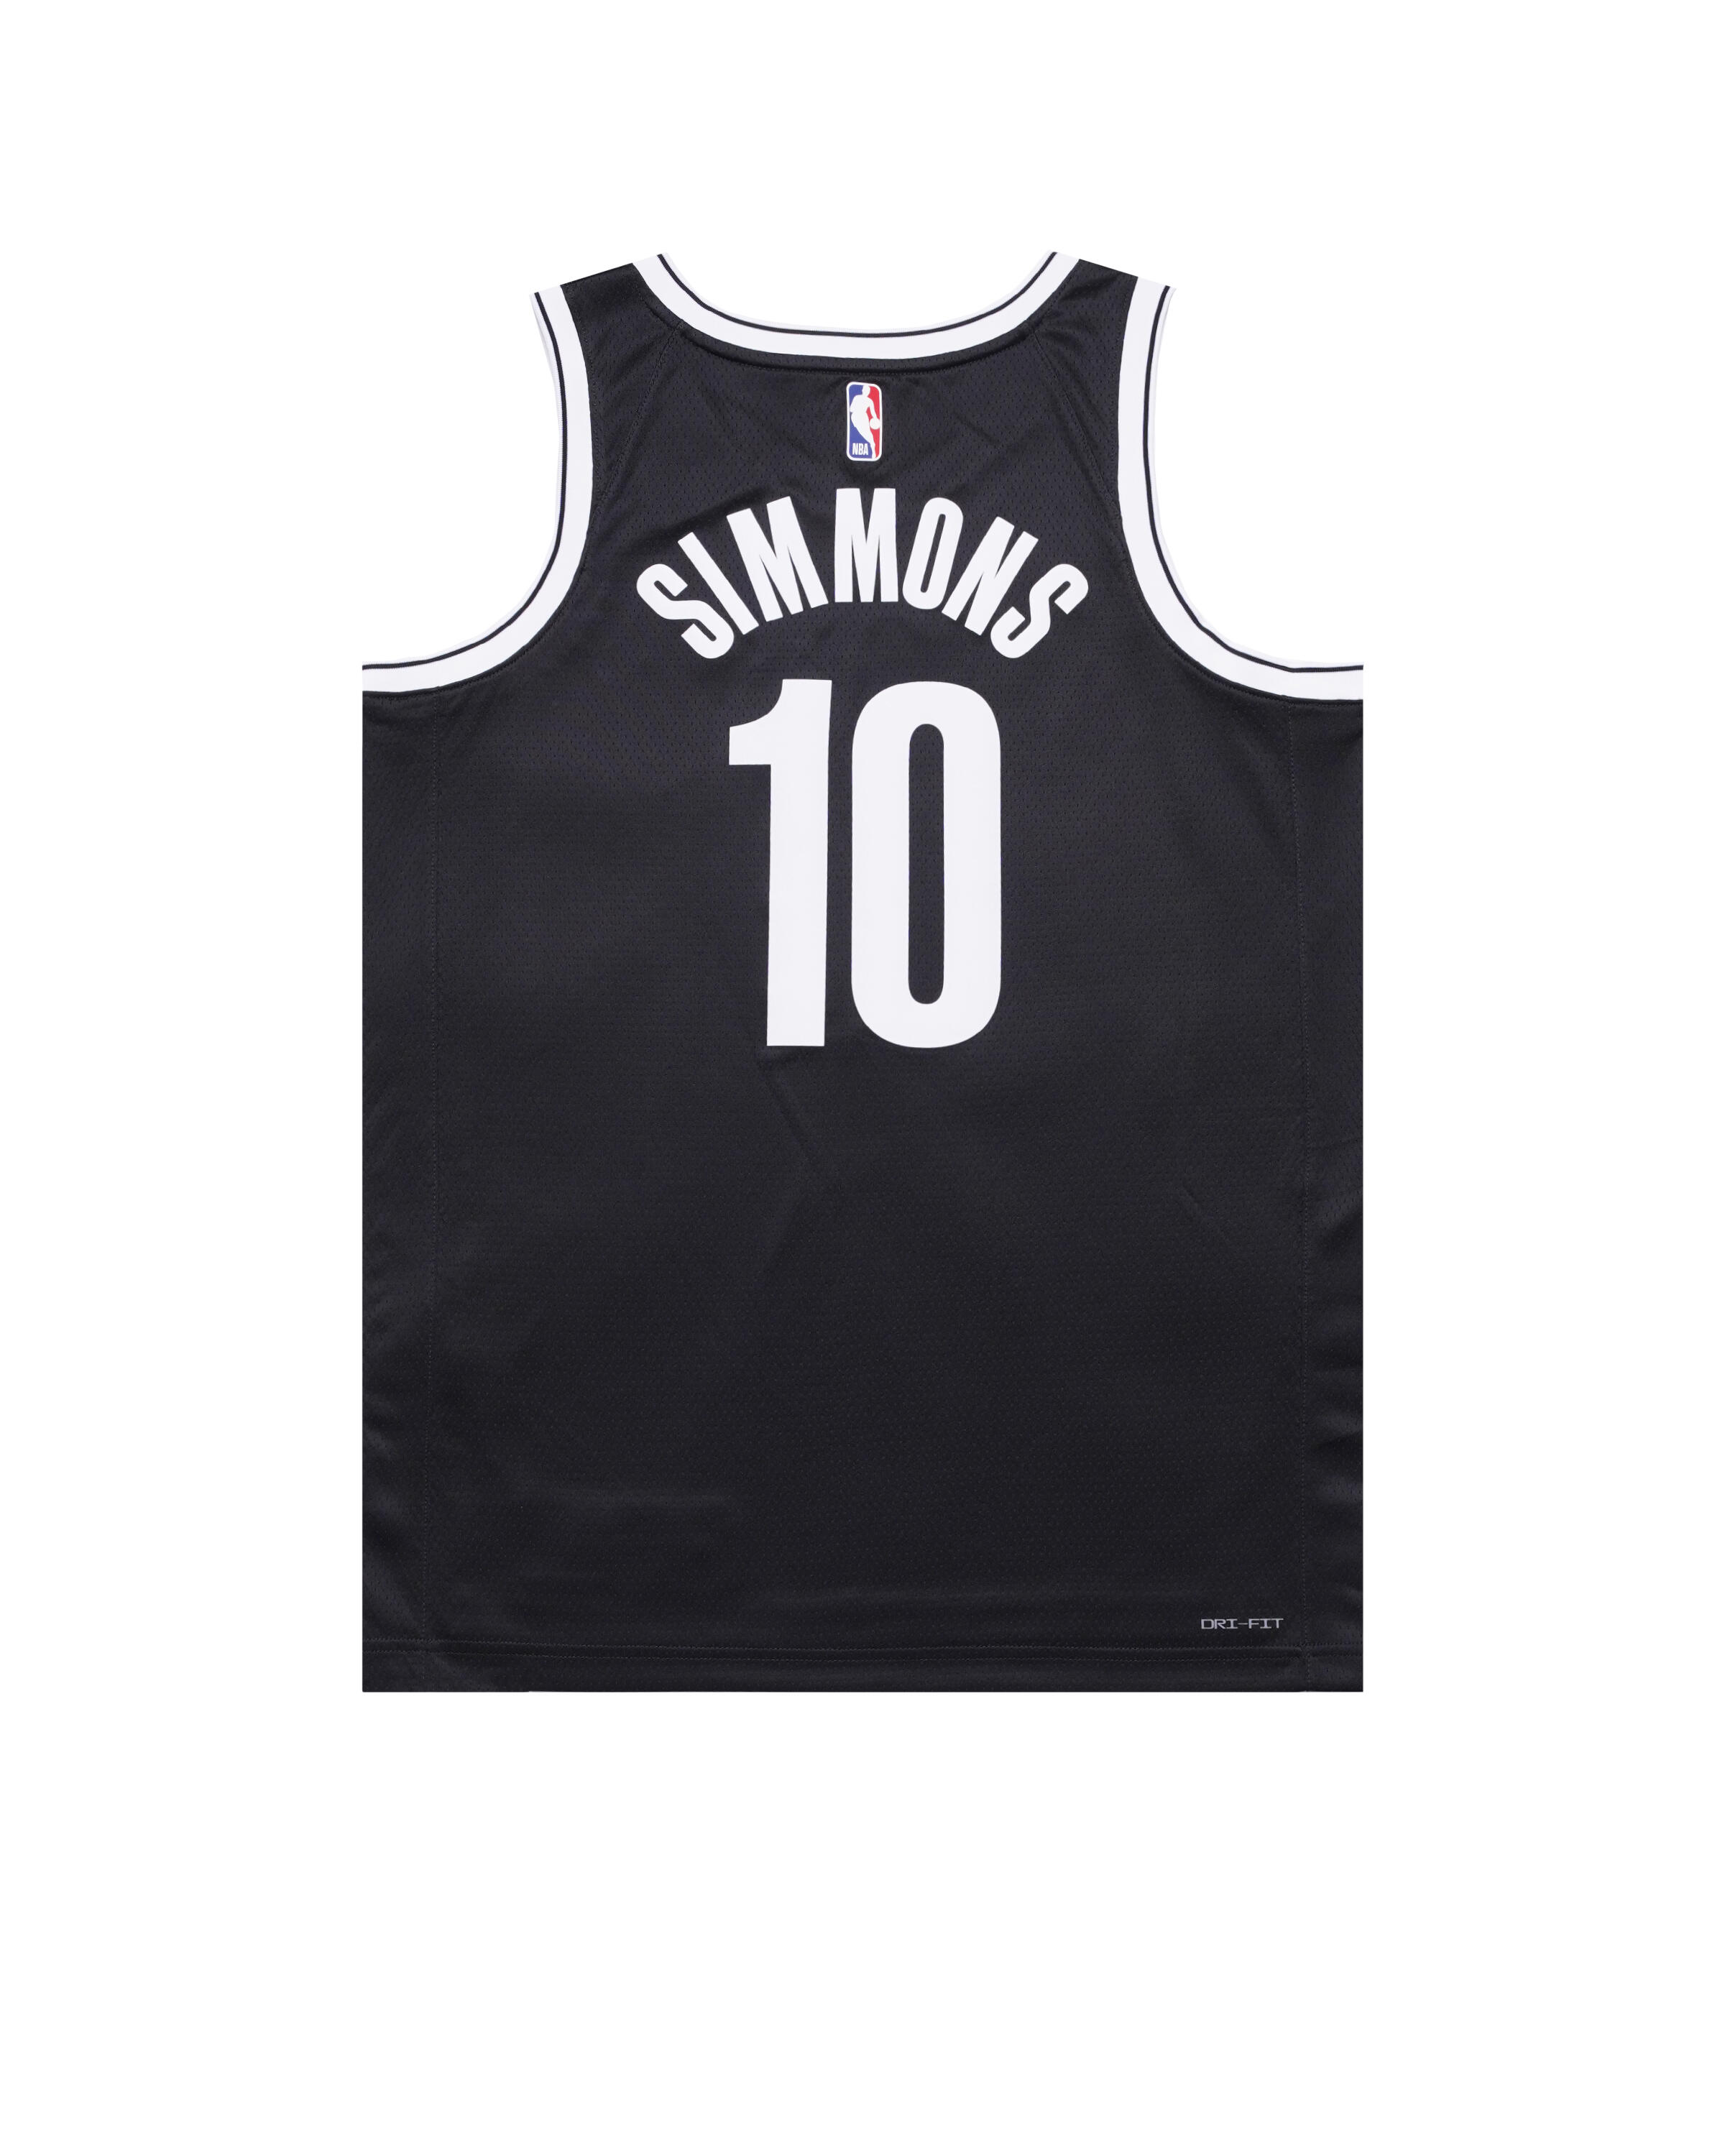 Nike SWINGMAN JERSEY Icon Edition - Brooklyn Nets 'Ben Simmons'